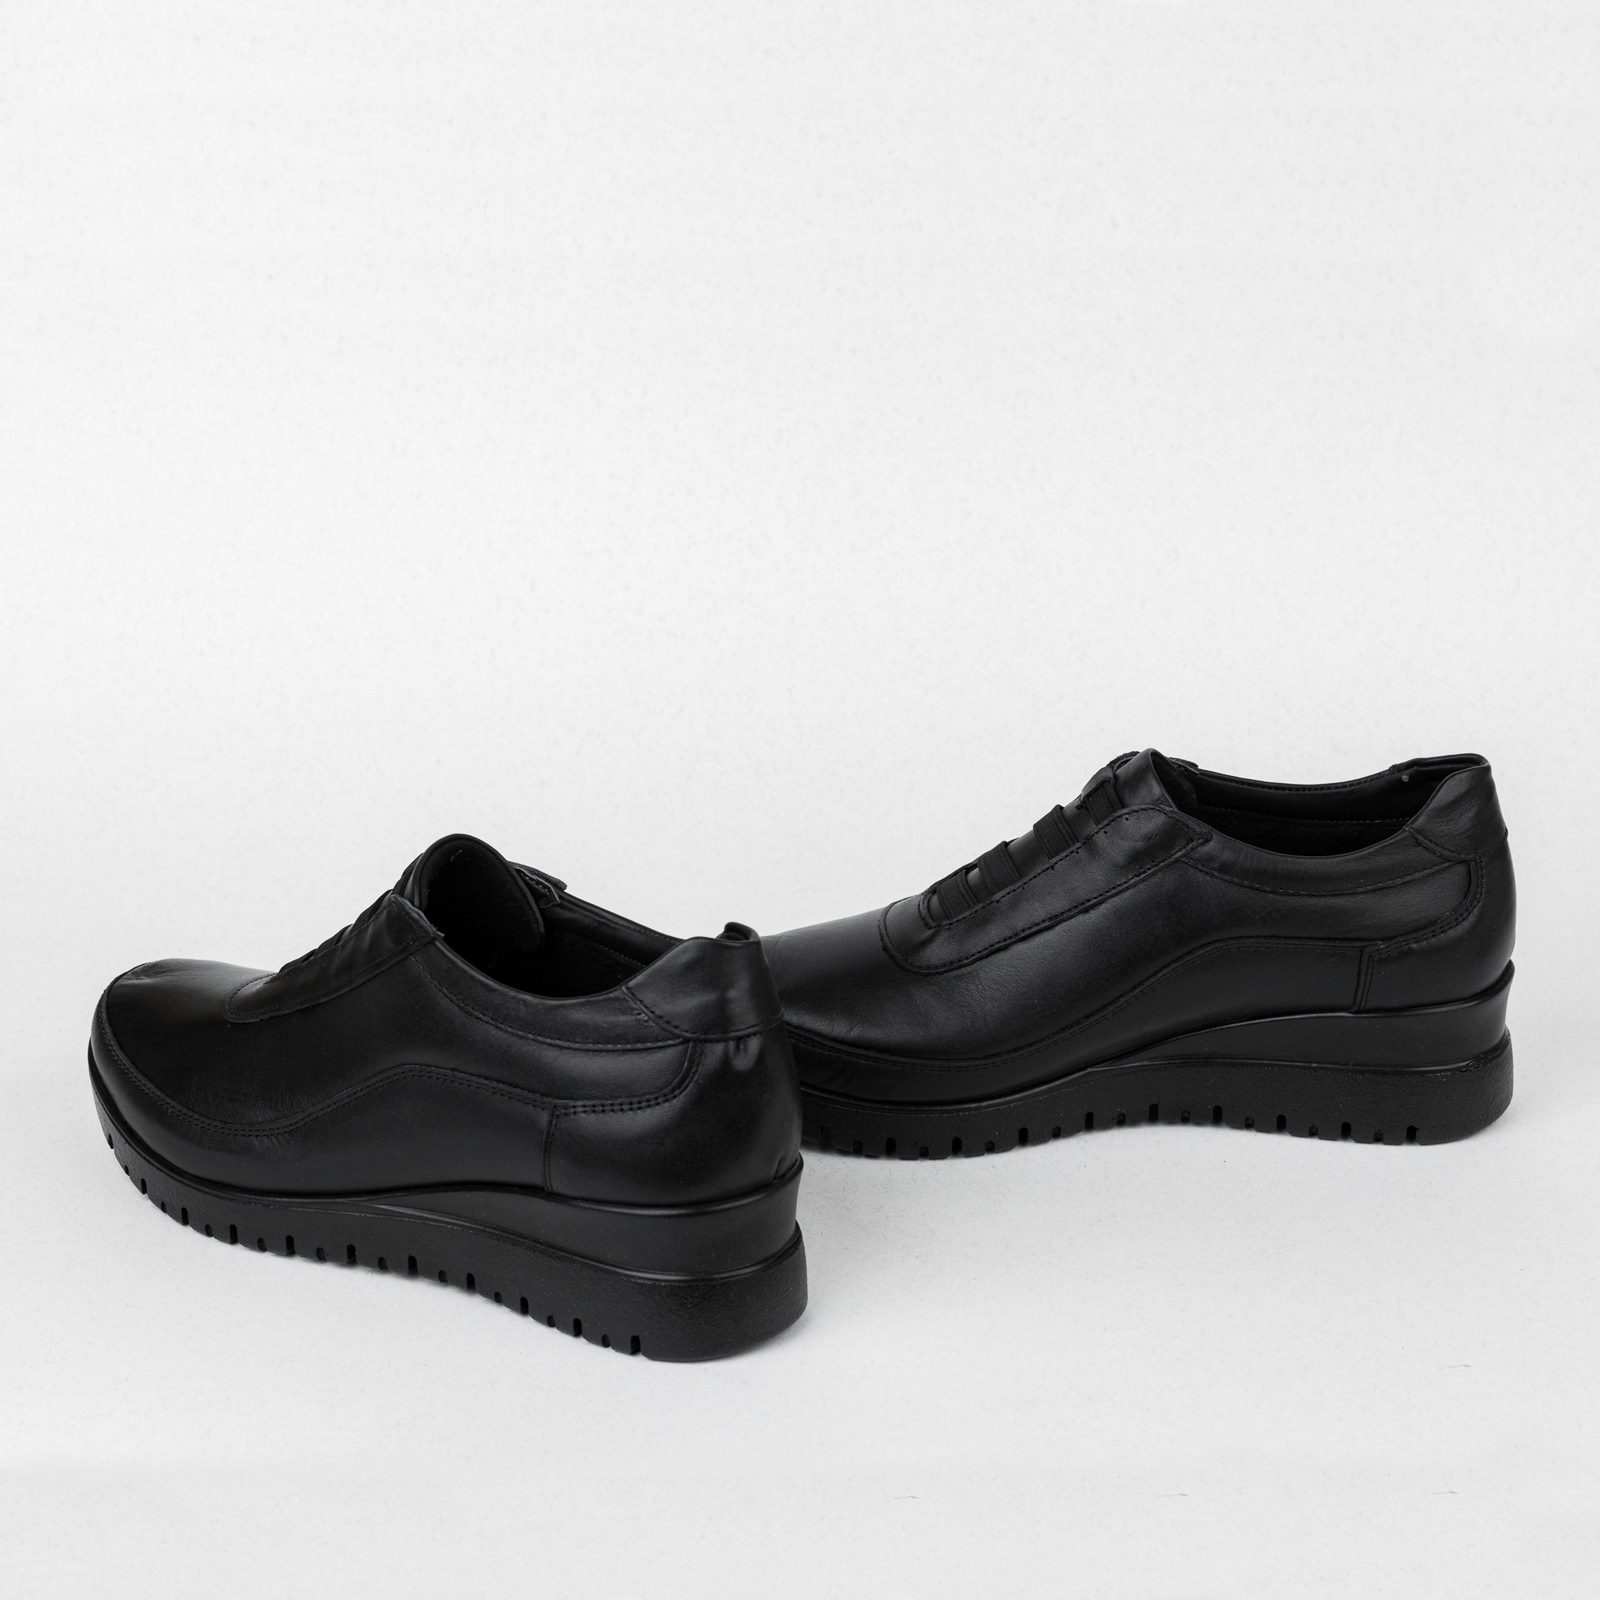 Leather shoes & flats B471 - BLACK